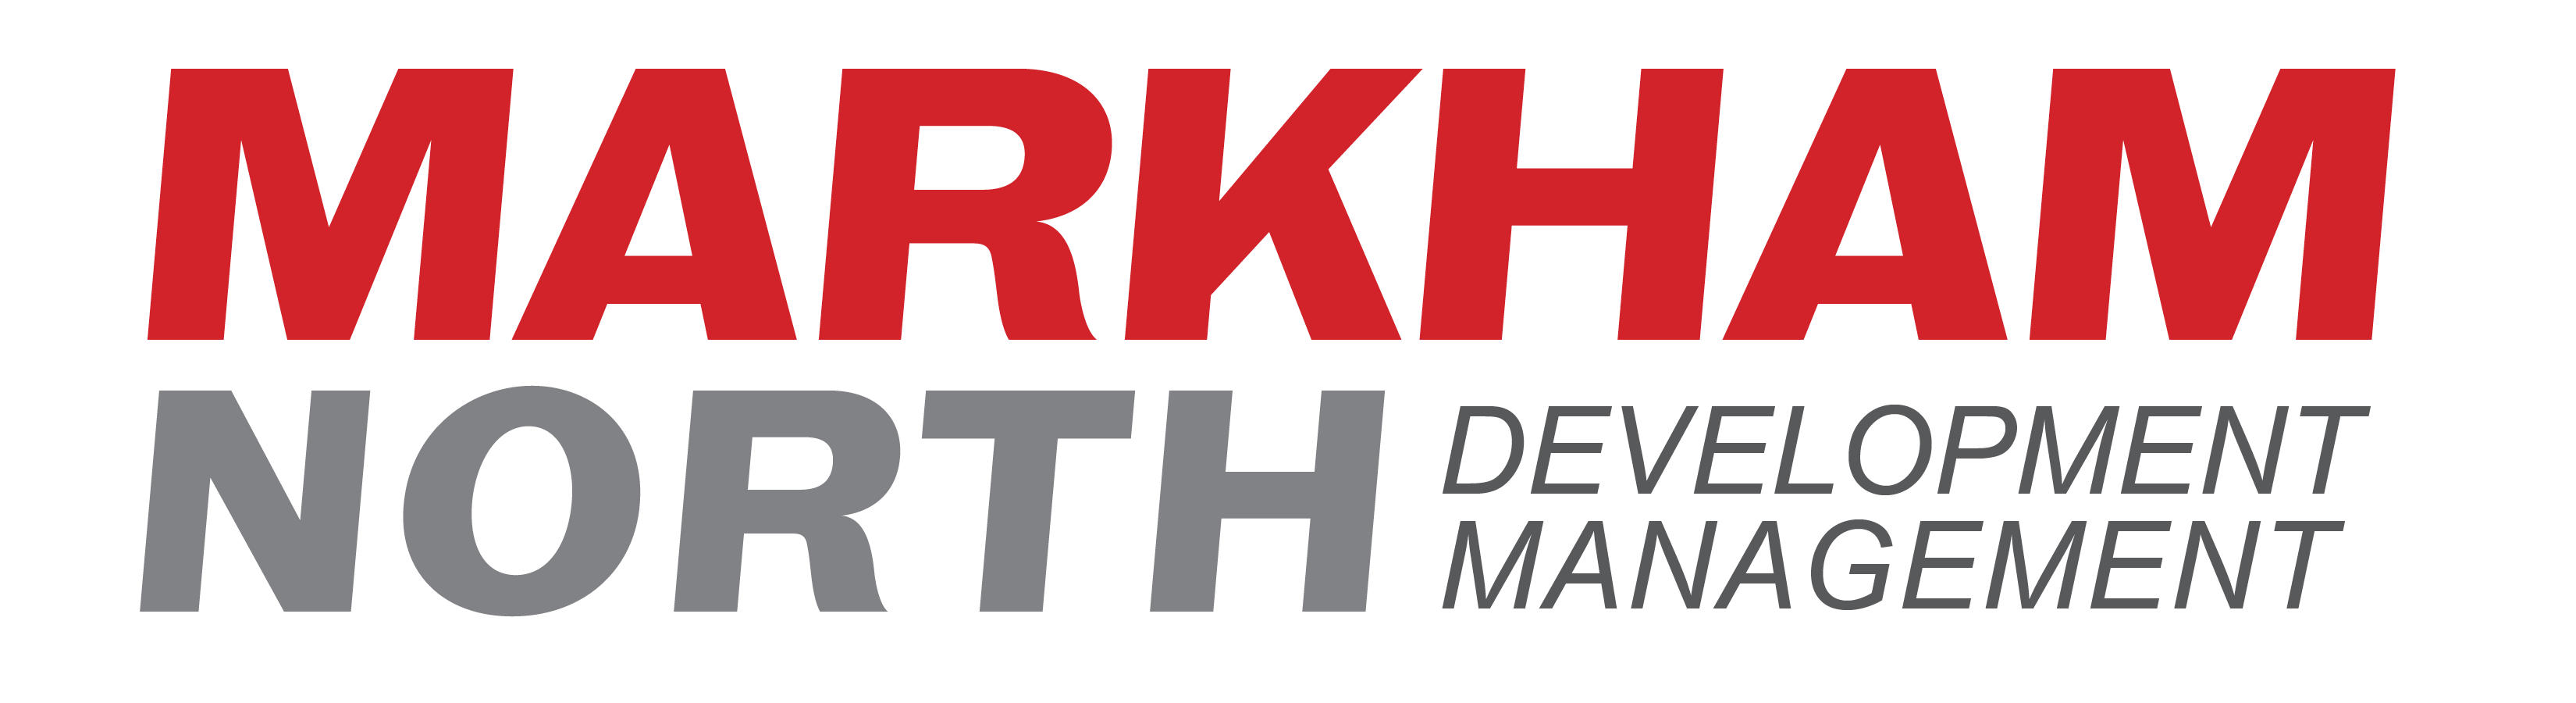 Markham North Development Management